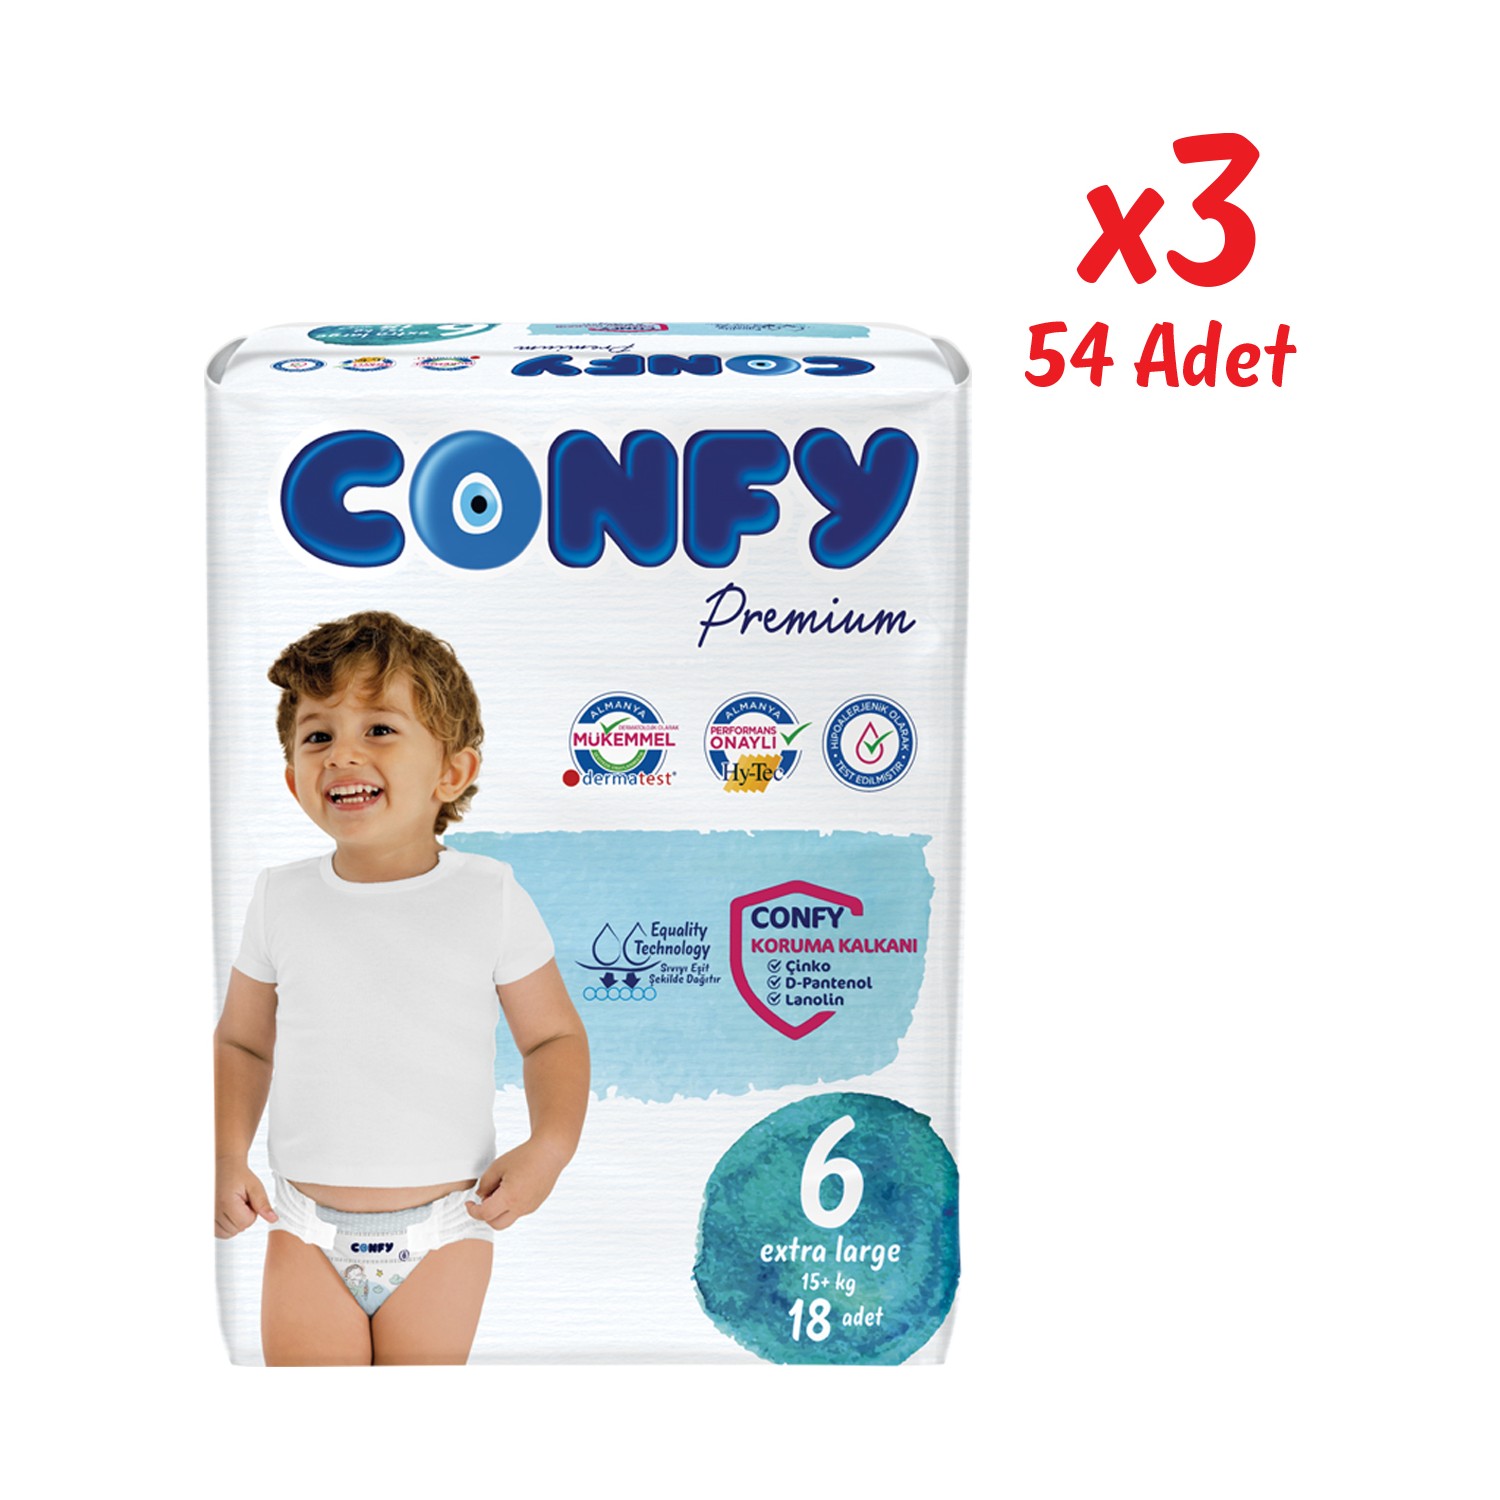 confy premium bebek bezi 6 beden extralarge 18 adet x 3 fiyati